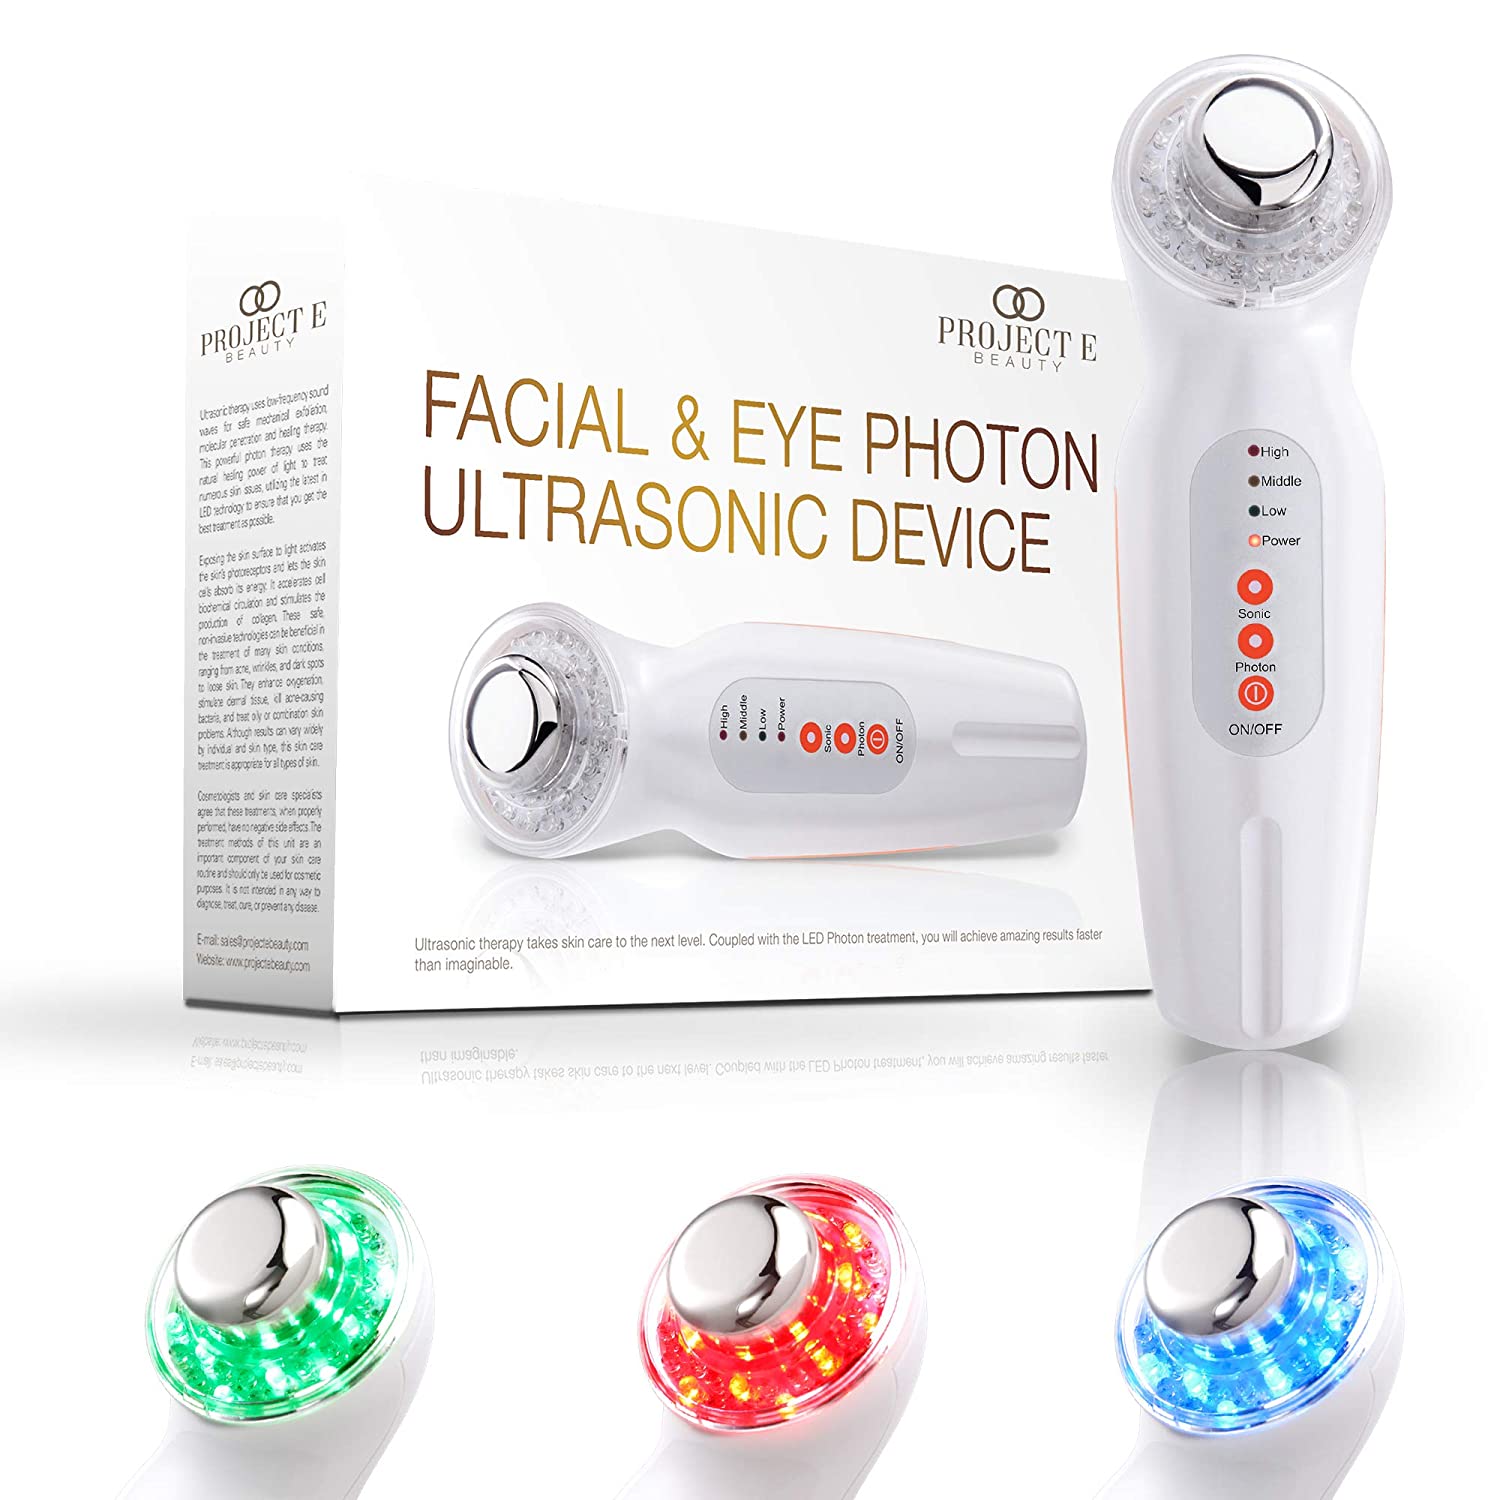 Project E Beauty Facial & Eye Photon Ultrasonic Message Device, Next Level Skin Care Machine